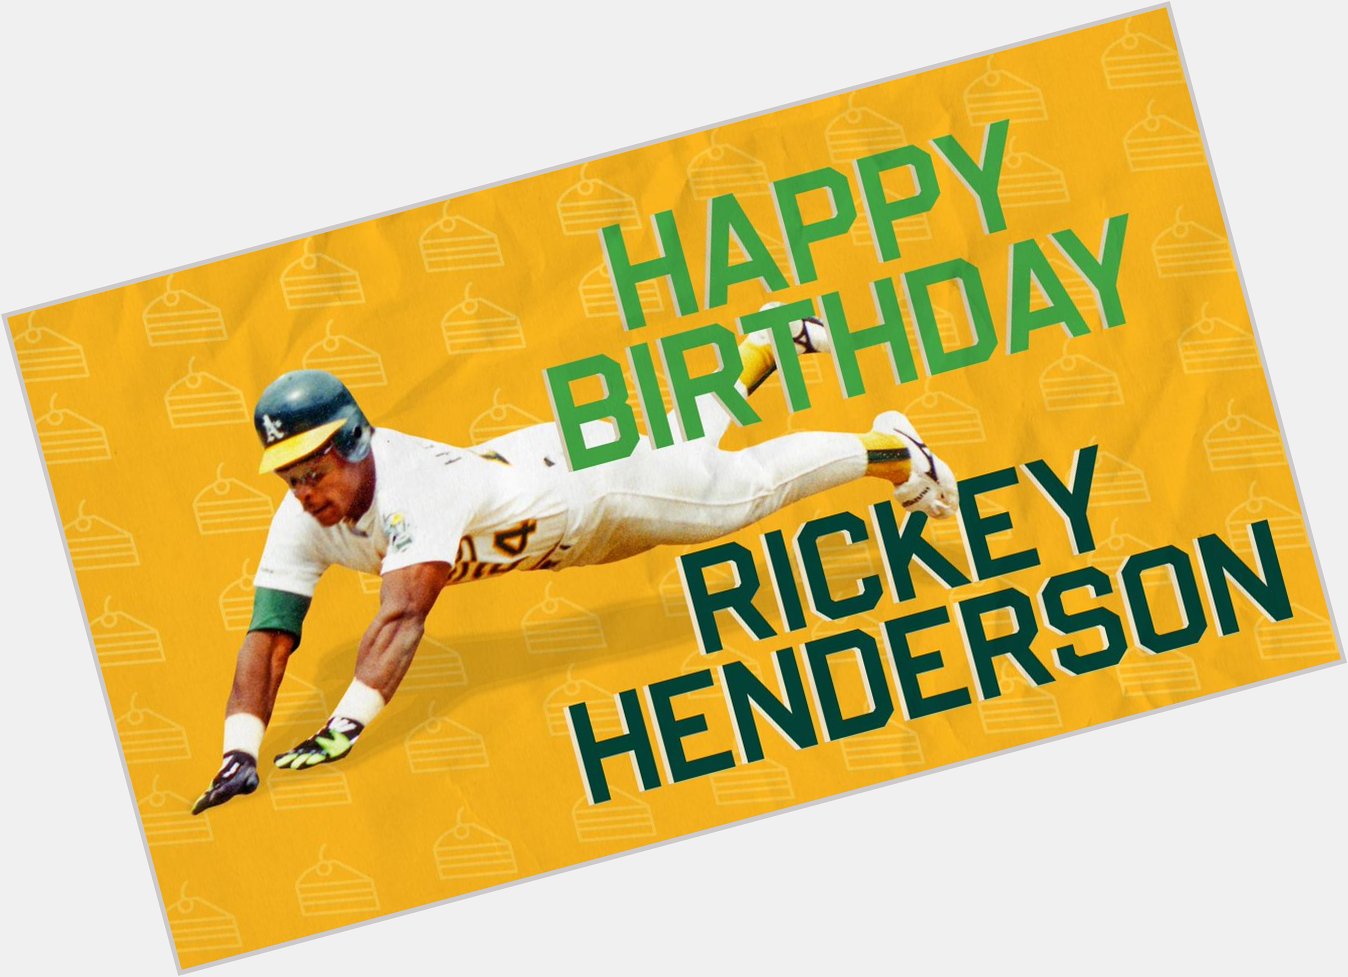 Join us in wishing Rickey Henderson a happy birthday! 